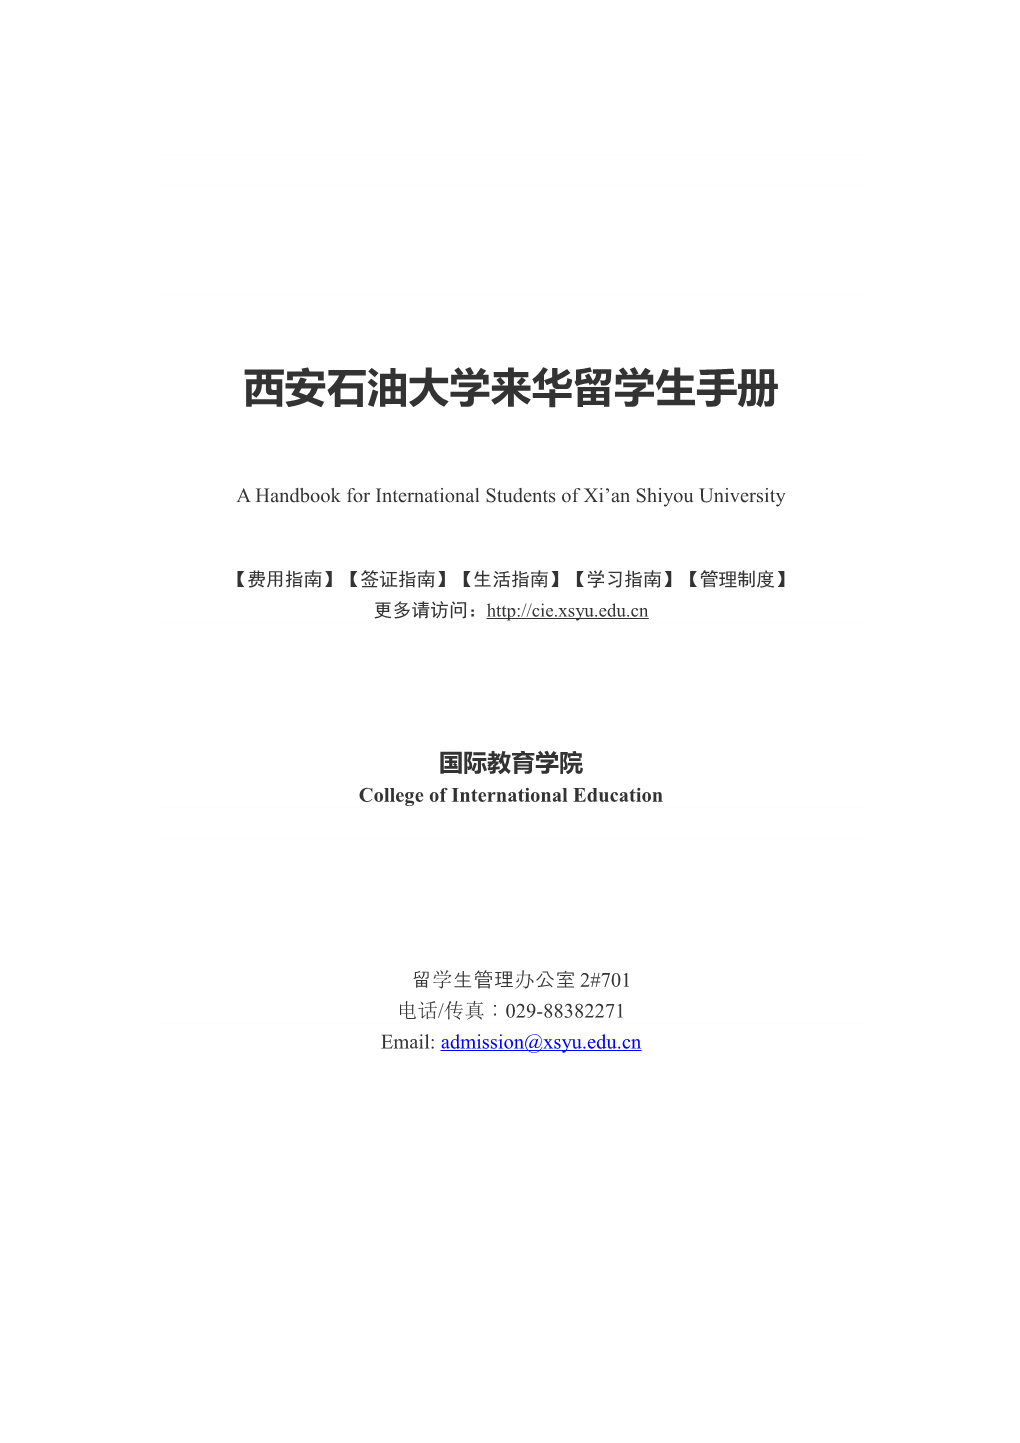 A Handbook for International Students of Xi an Shiyou University